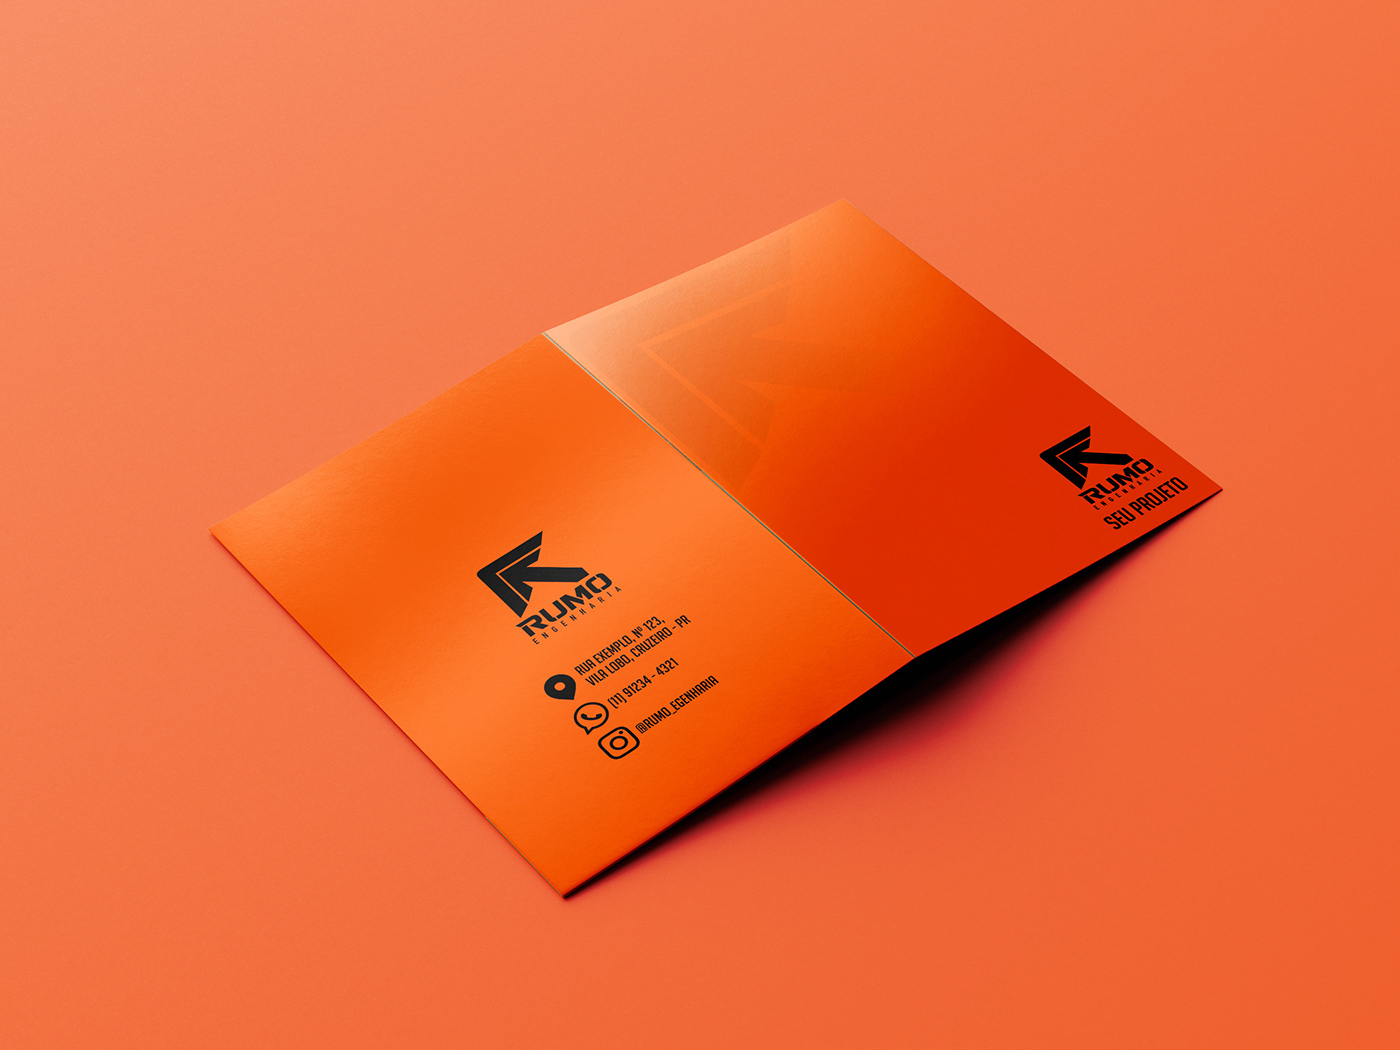 folder folder design design orange Engenharia civil engineering Folders Printing